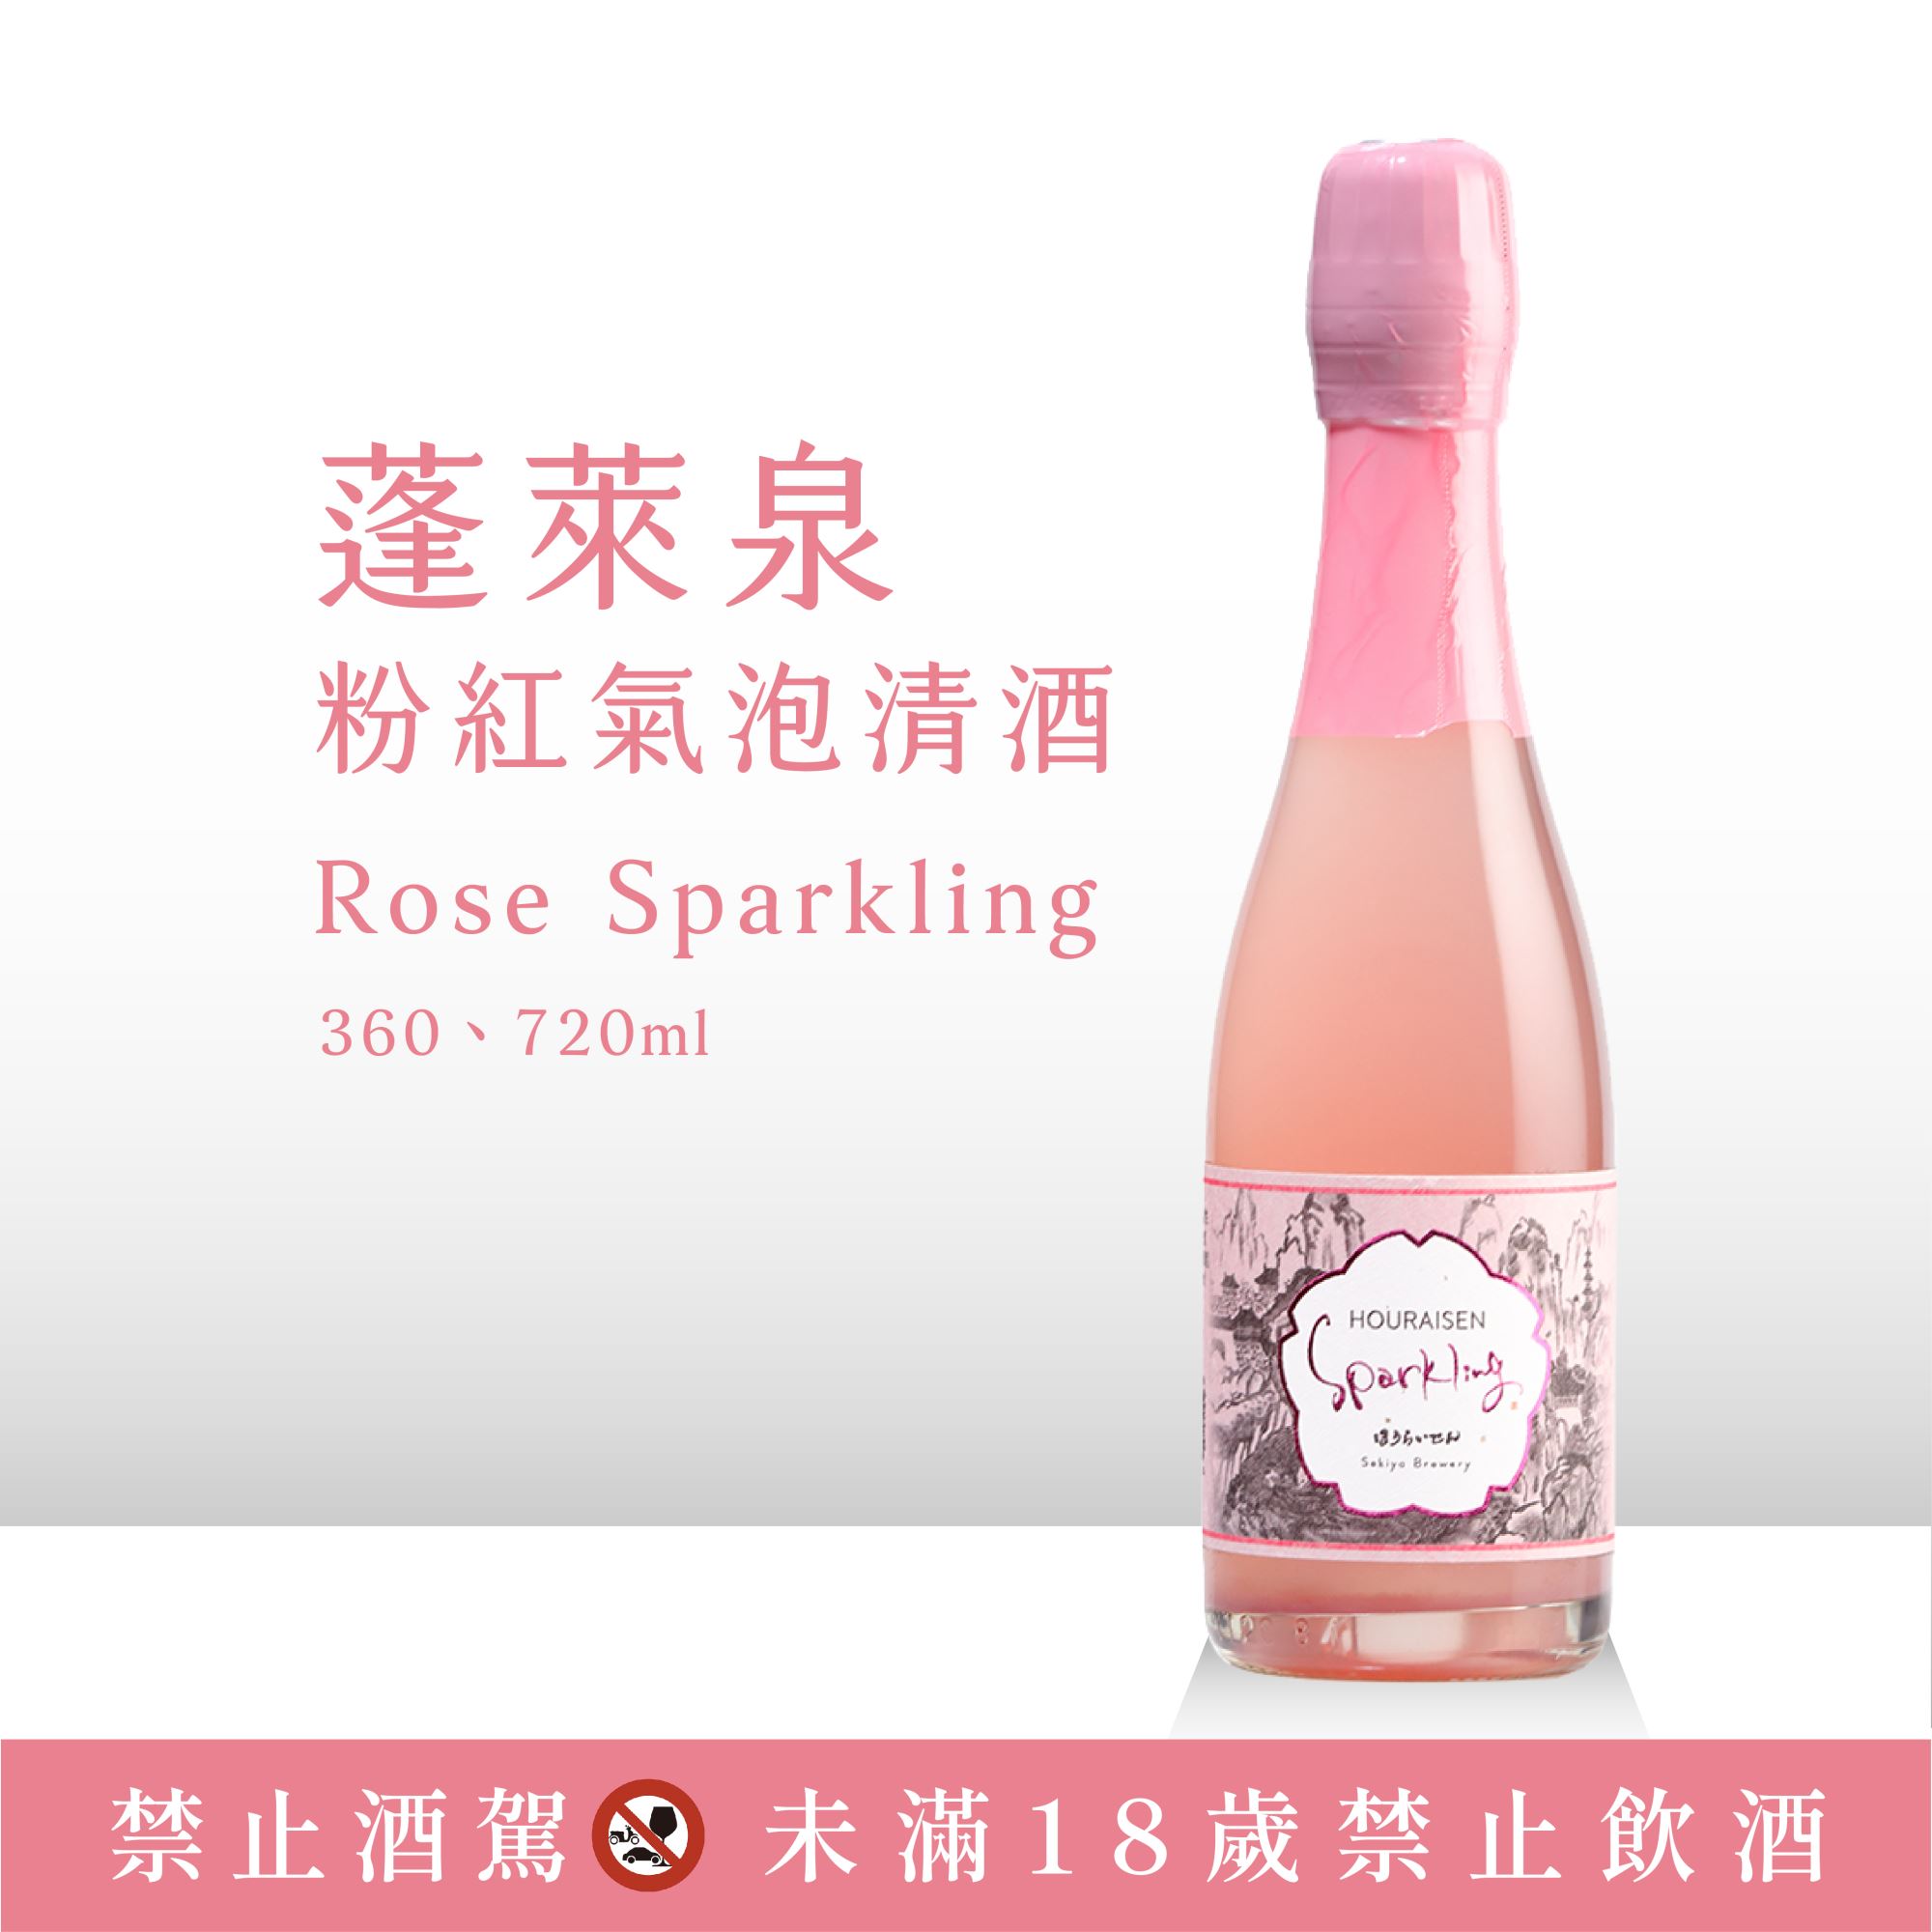 蓬萊泉 粉紅氣泡清酒 Rose Sparkling